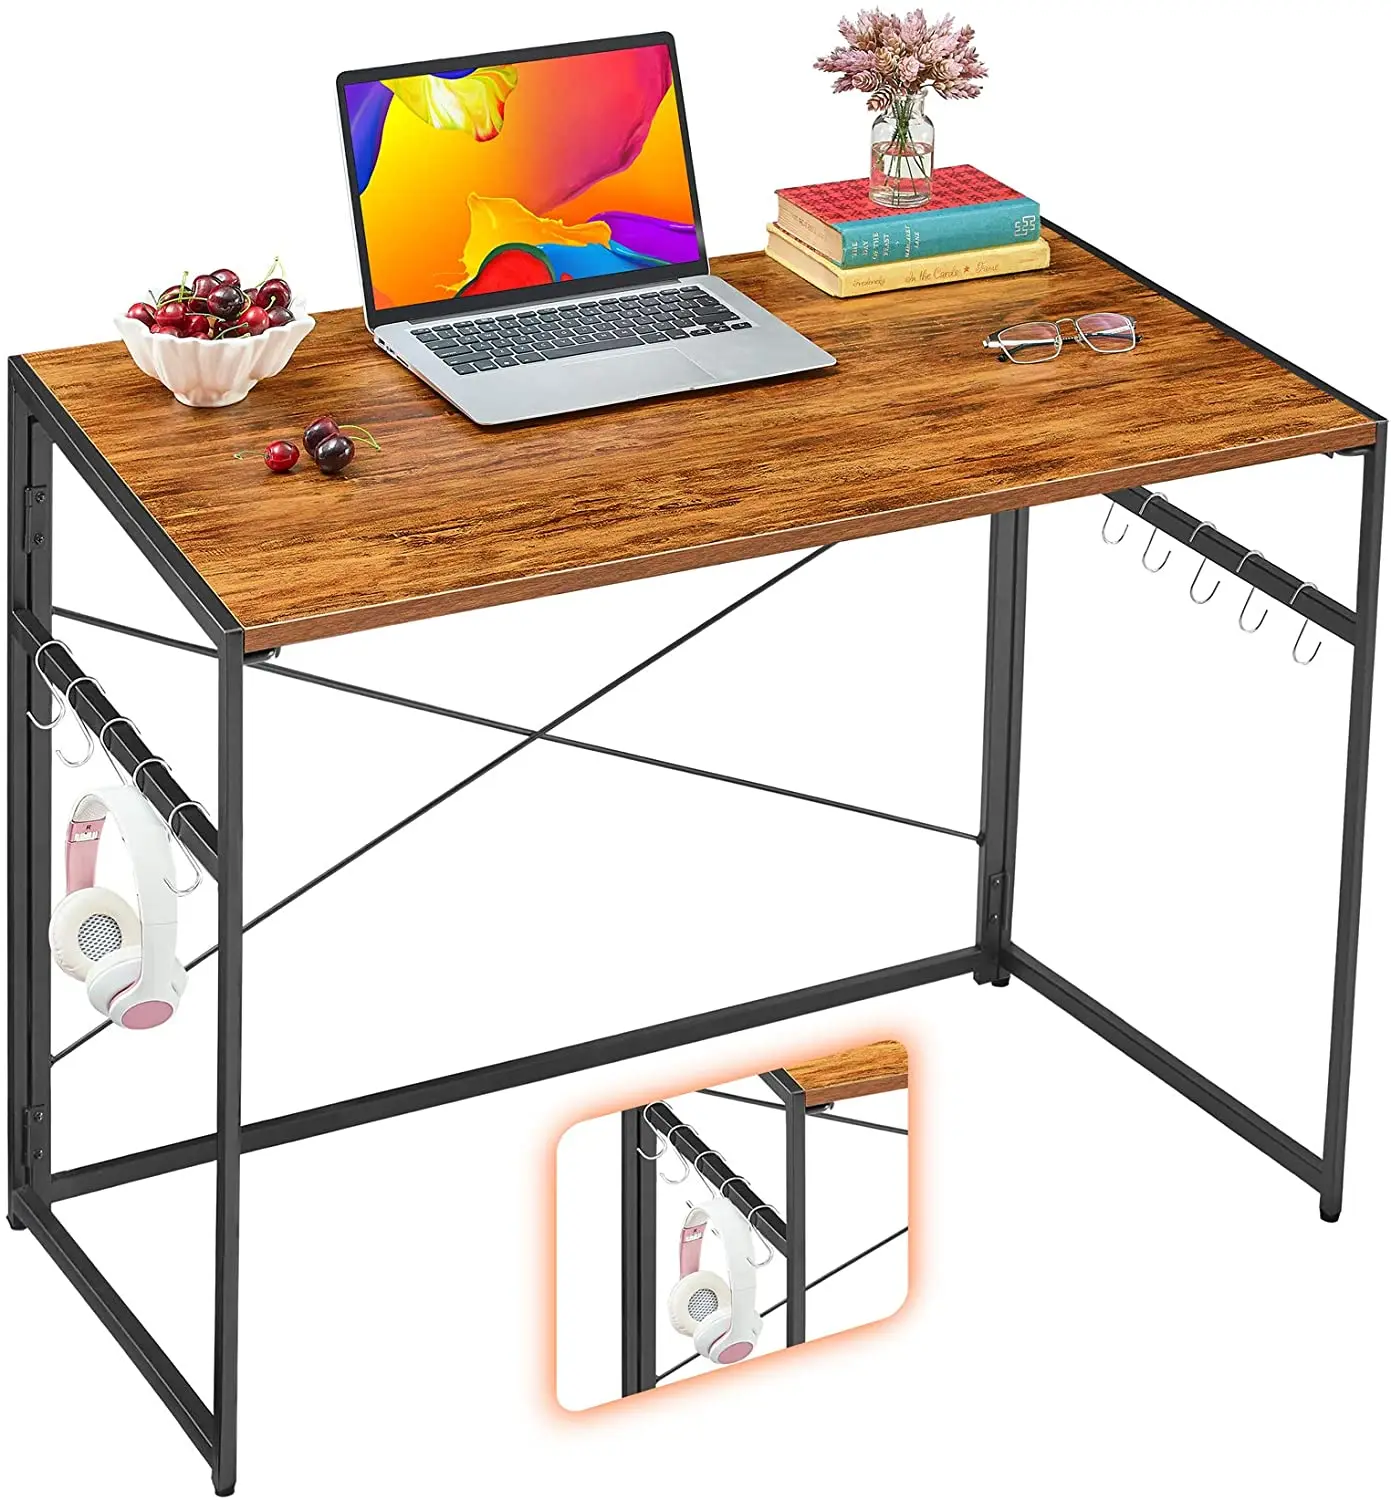 meja komputer lipat,meja tulis kecil,rangka logam rakitan mudah,meja laptop  tempat kerja menulis - buy sederhana meja komputer,dengan harga murah meja